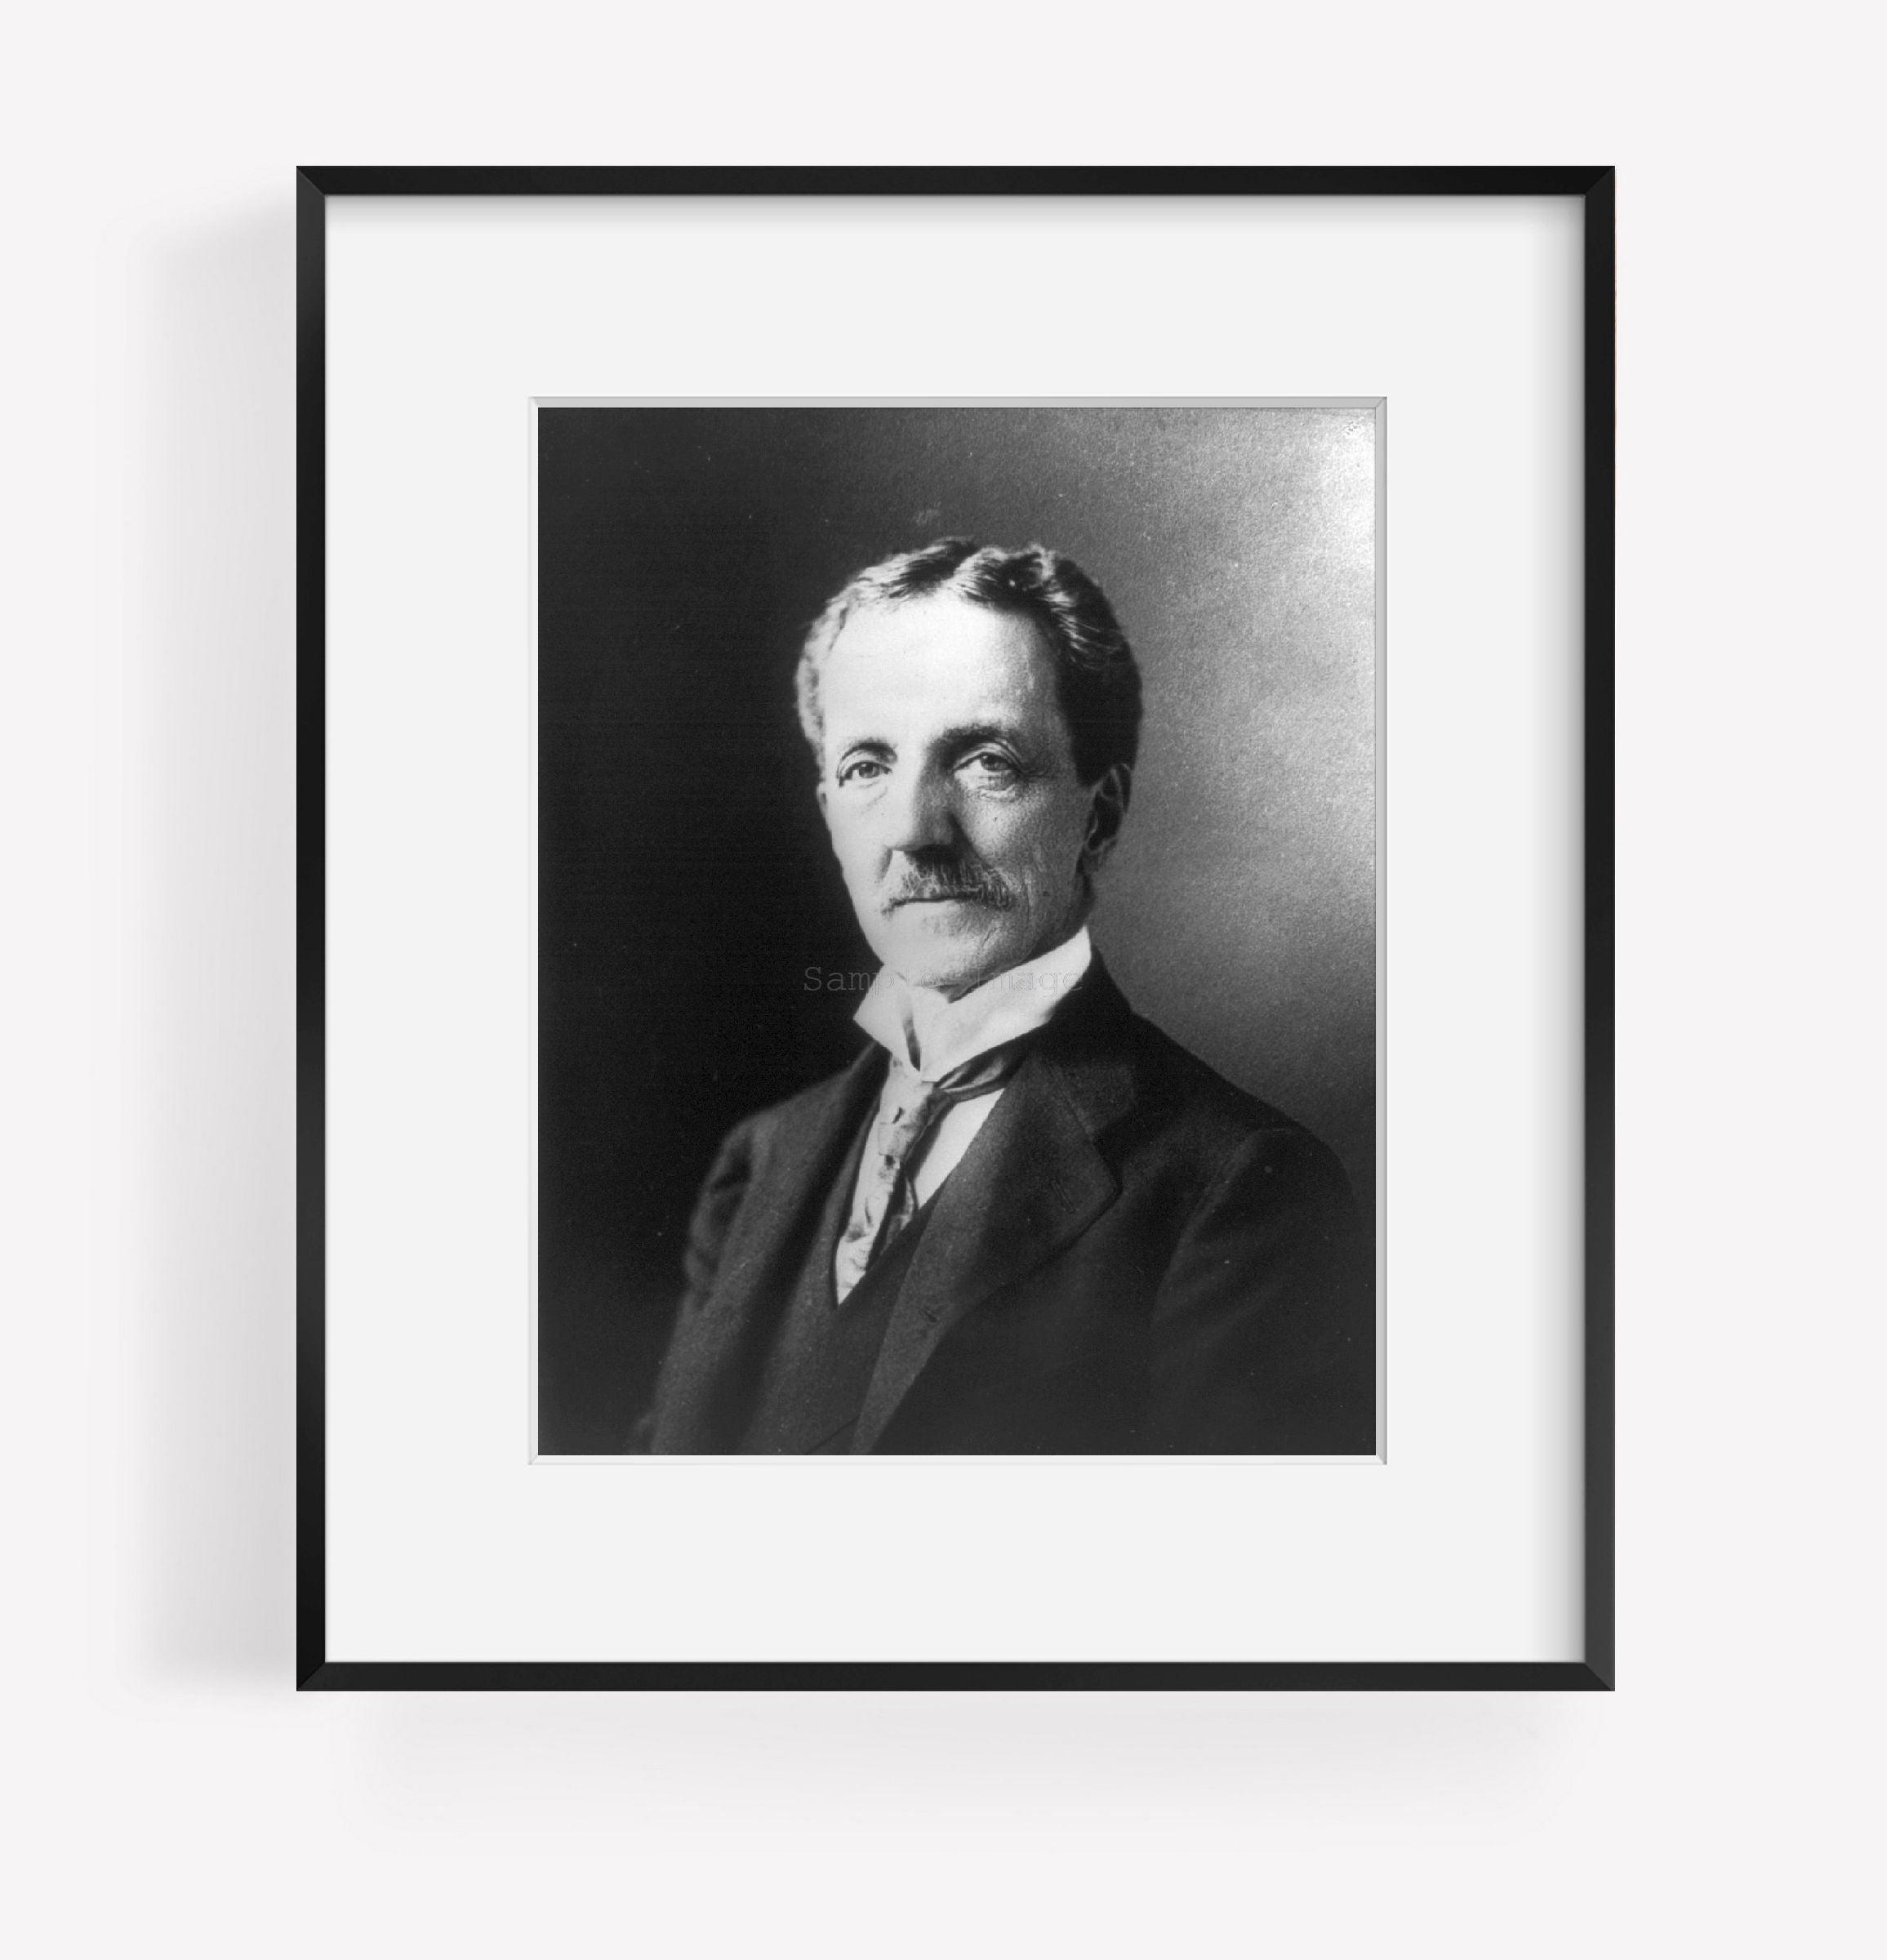 c1906 photograph of William H. Barnes, head-and-shoulders portrait, facing left